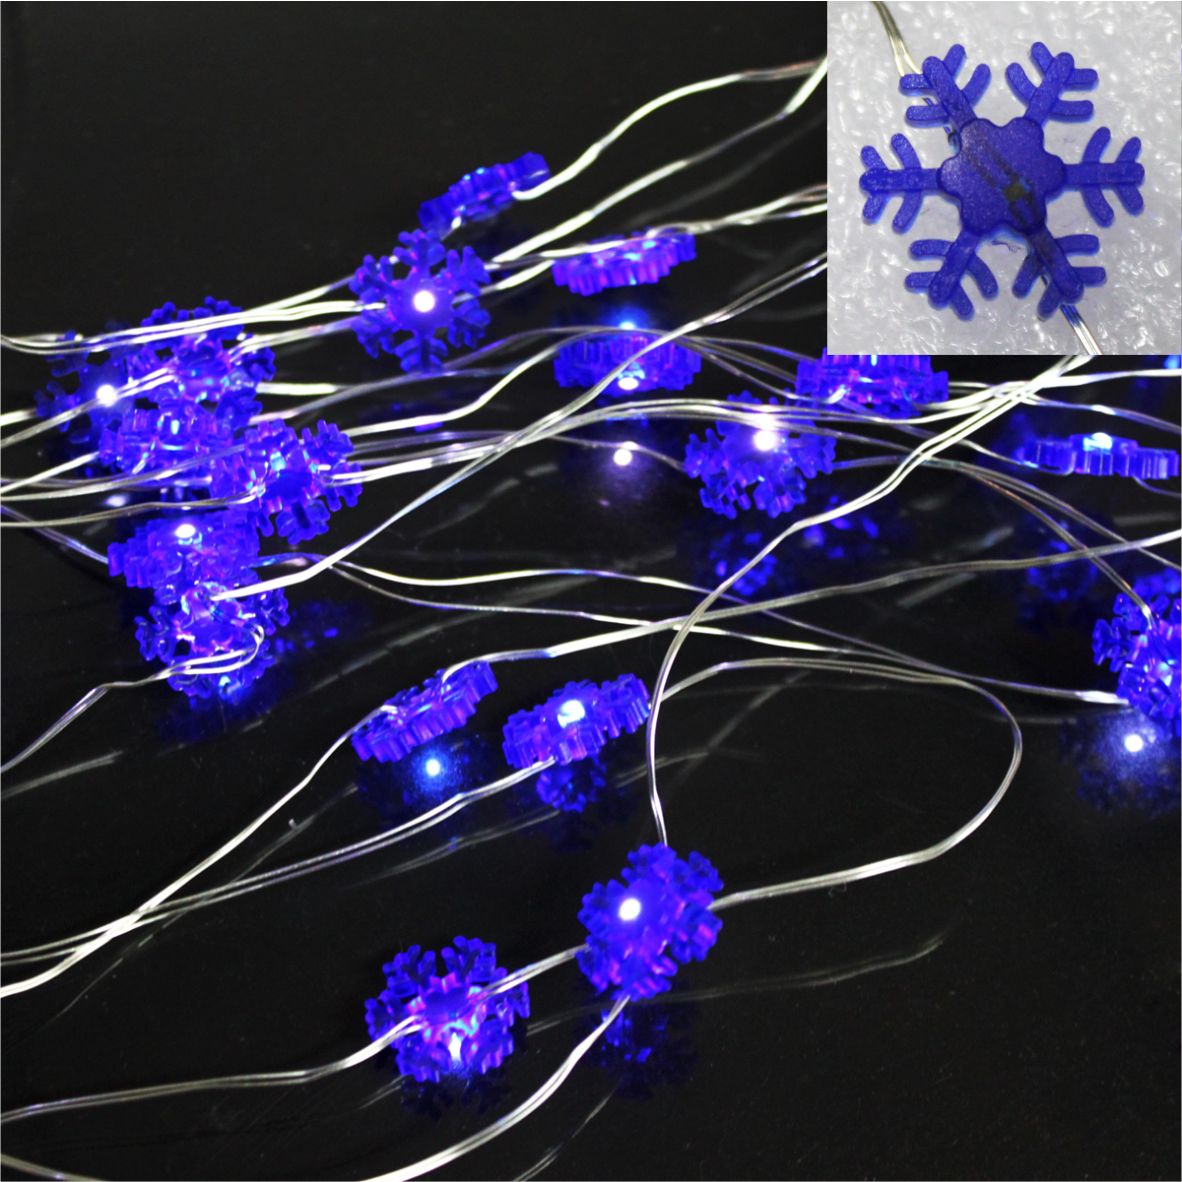 LED string light snowflake ornament